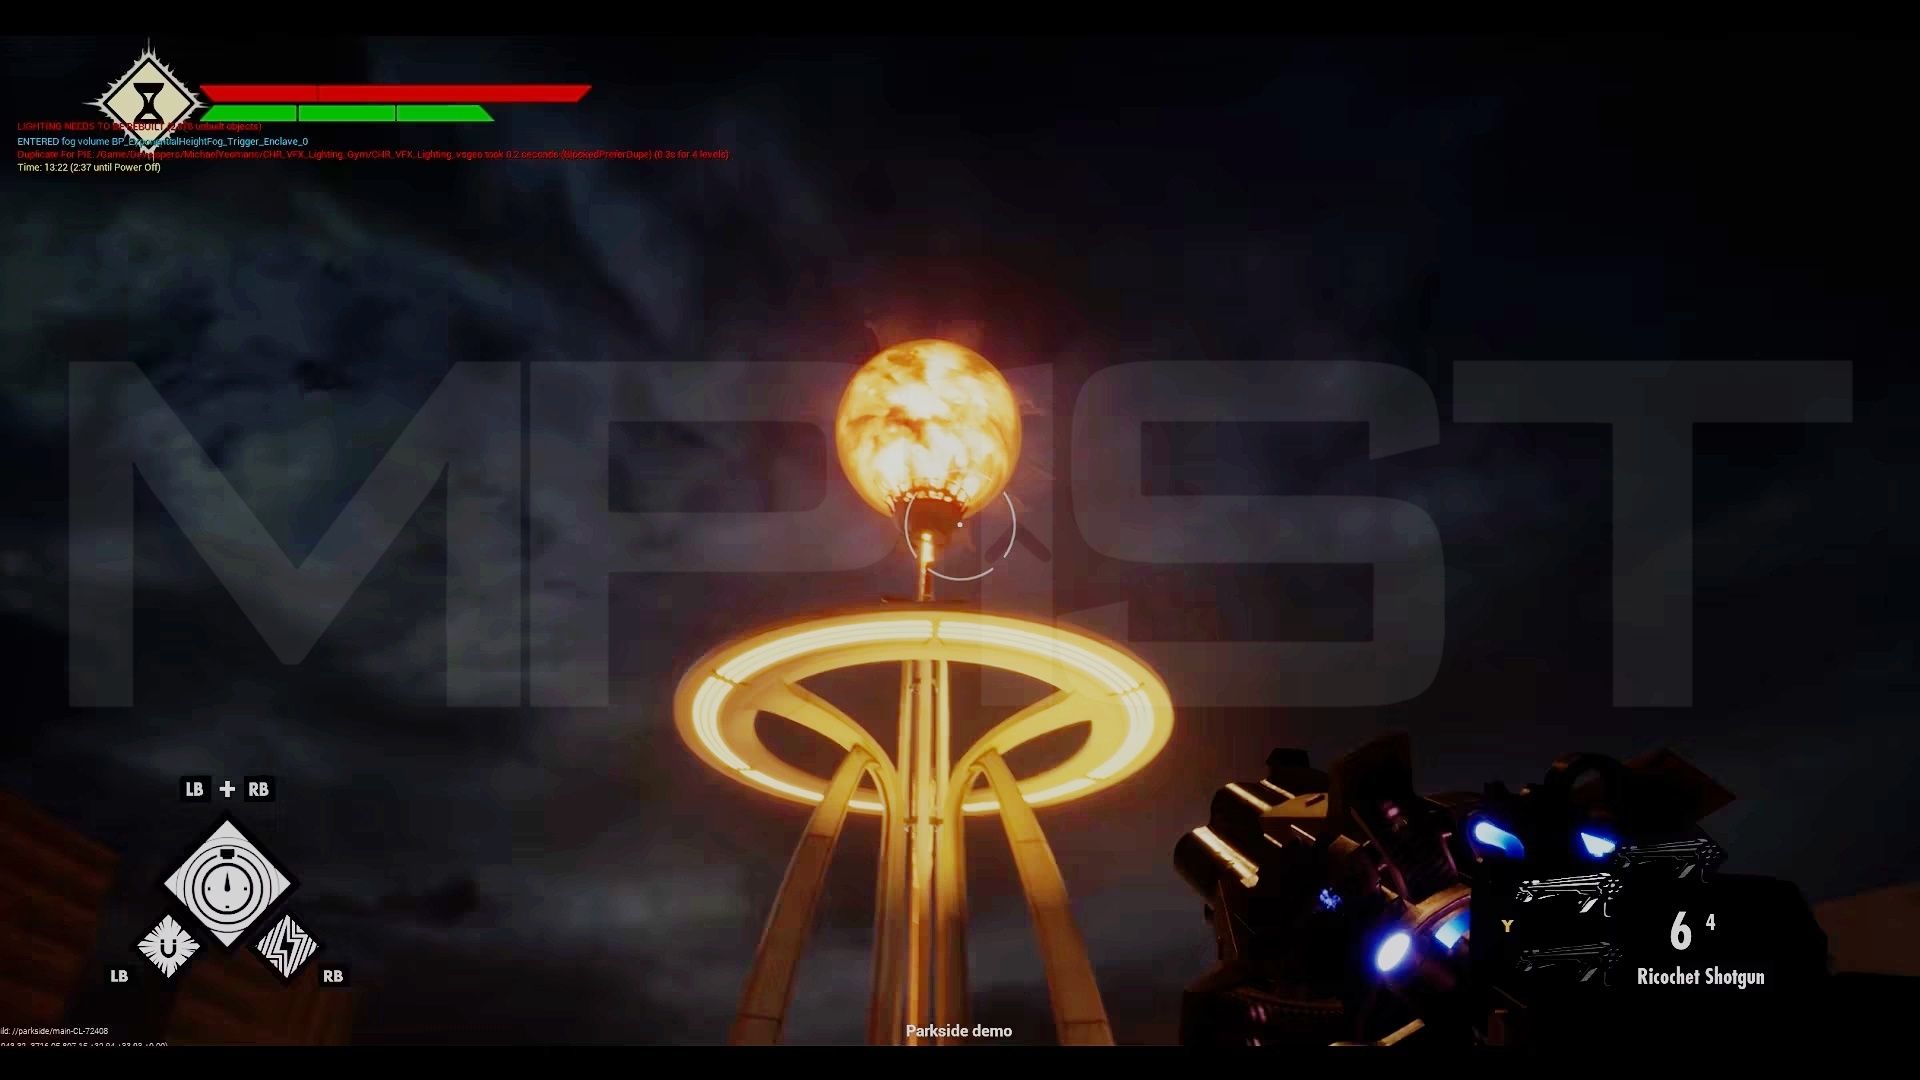 BioShock 4 Building Screenshot Leaks, Suggests Time-Controlling Powers